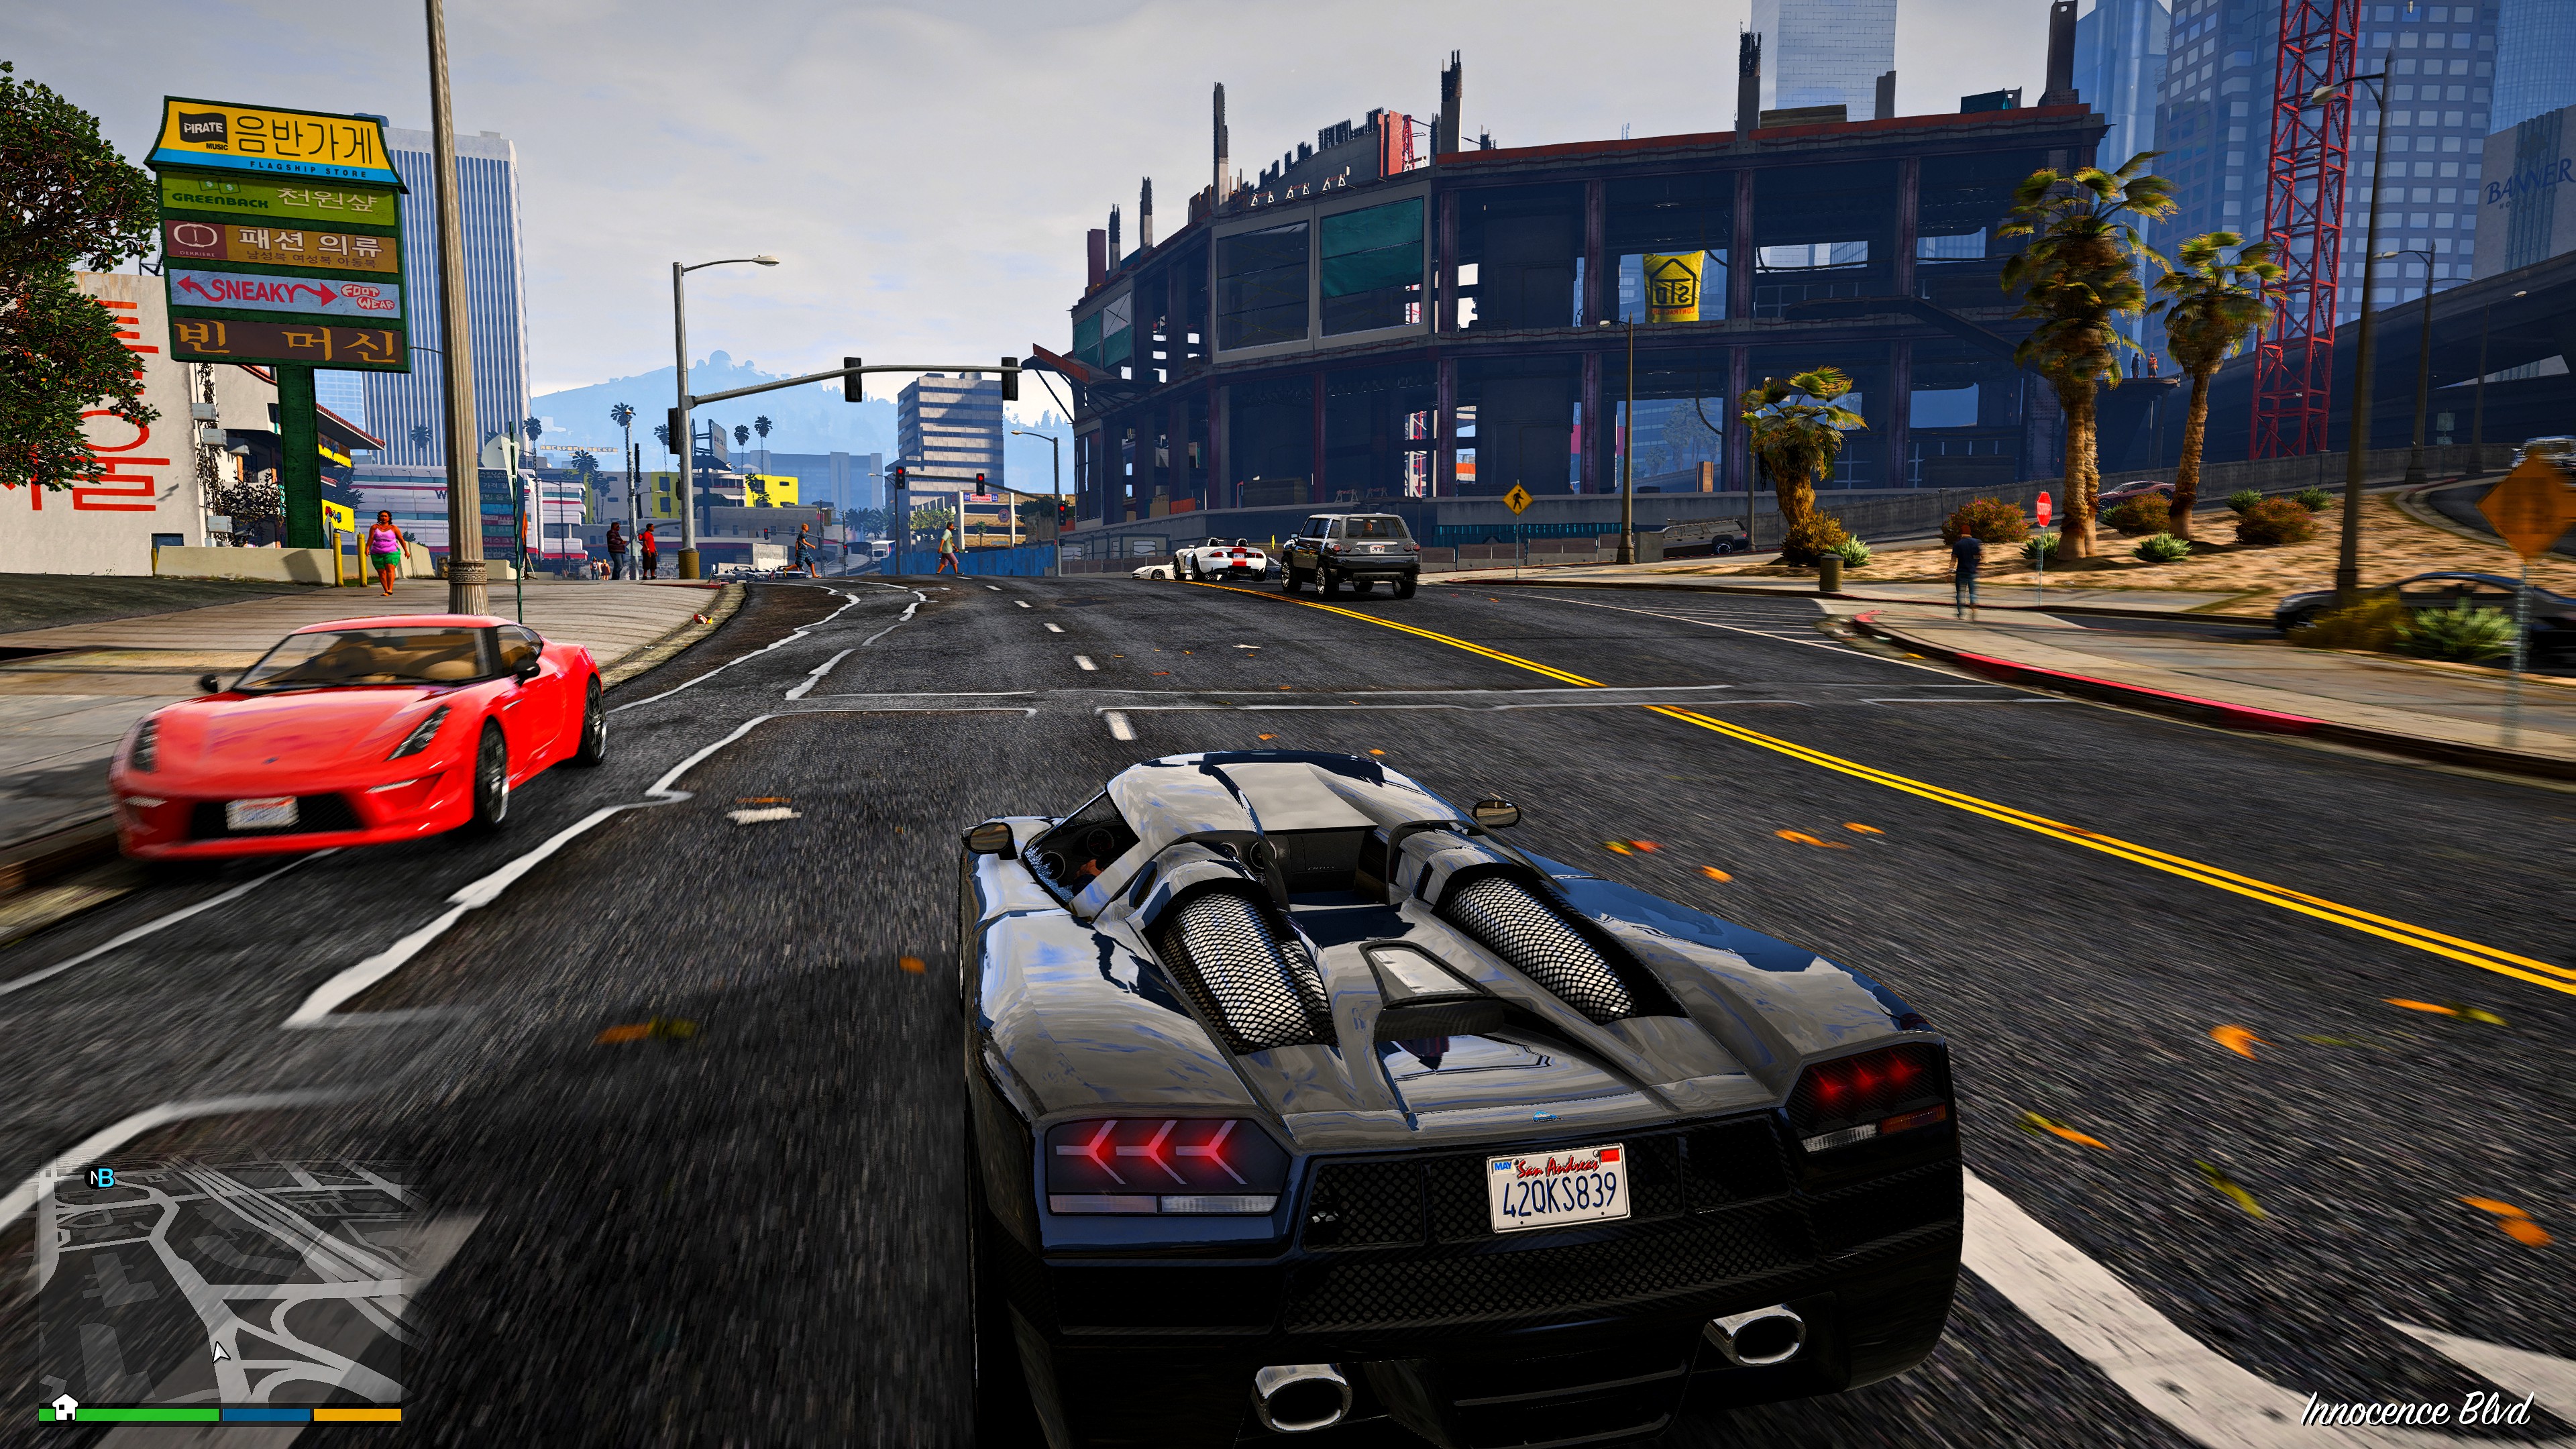 Gta 6 Date Sortie Casino GTA 6 : Date de sortie du prochain Grand Theft Auto - Breakflip